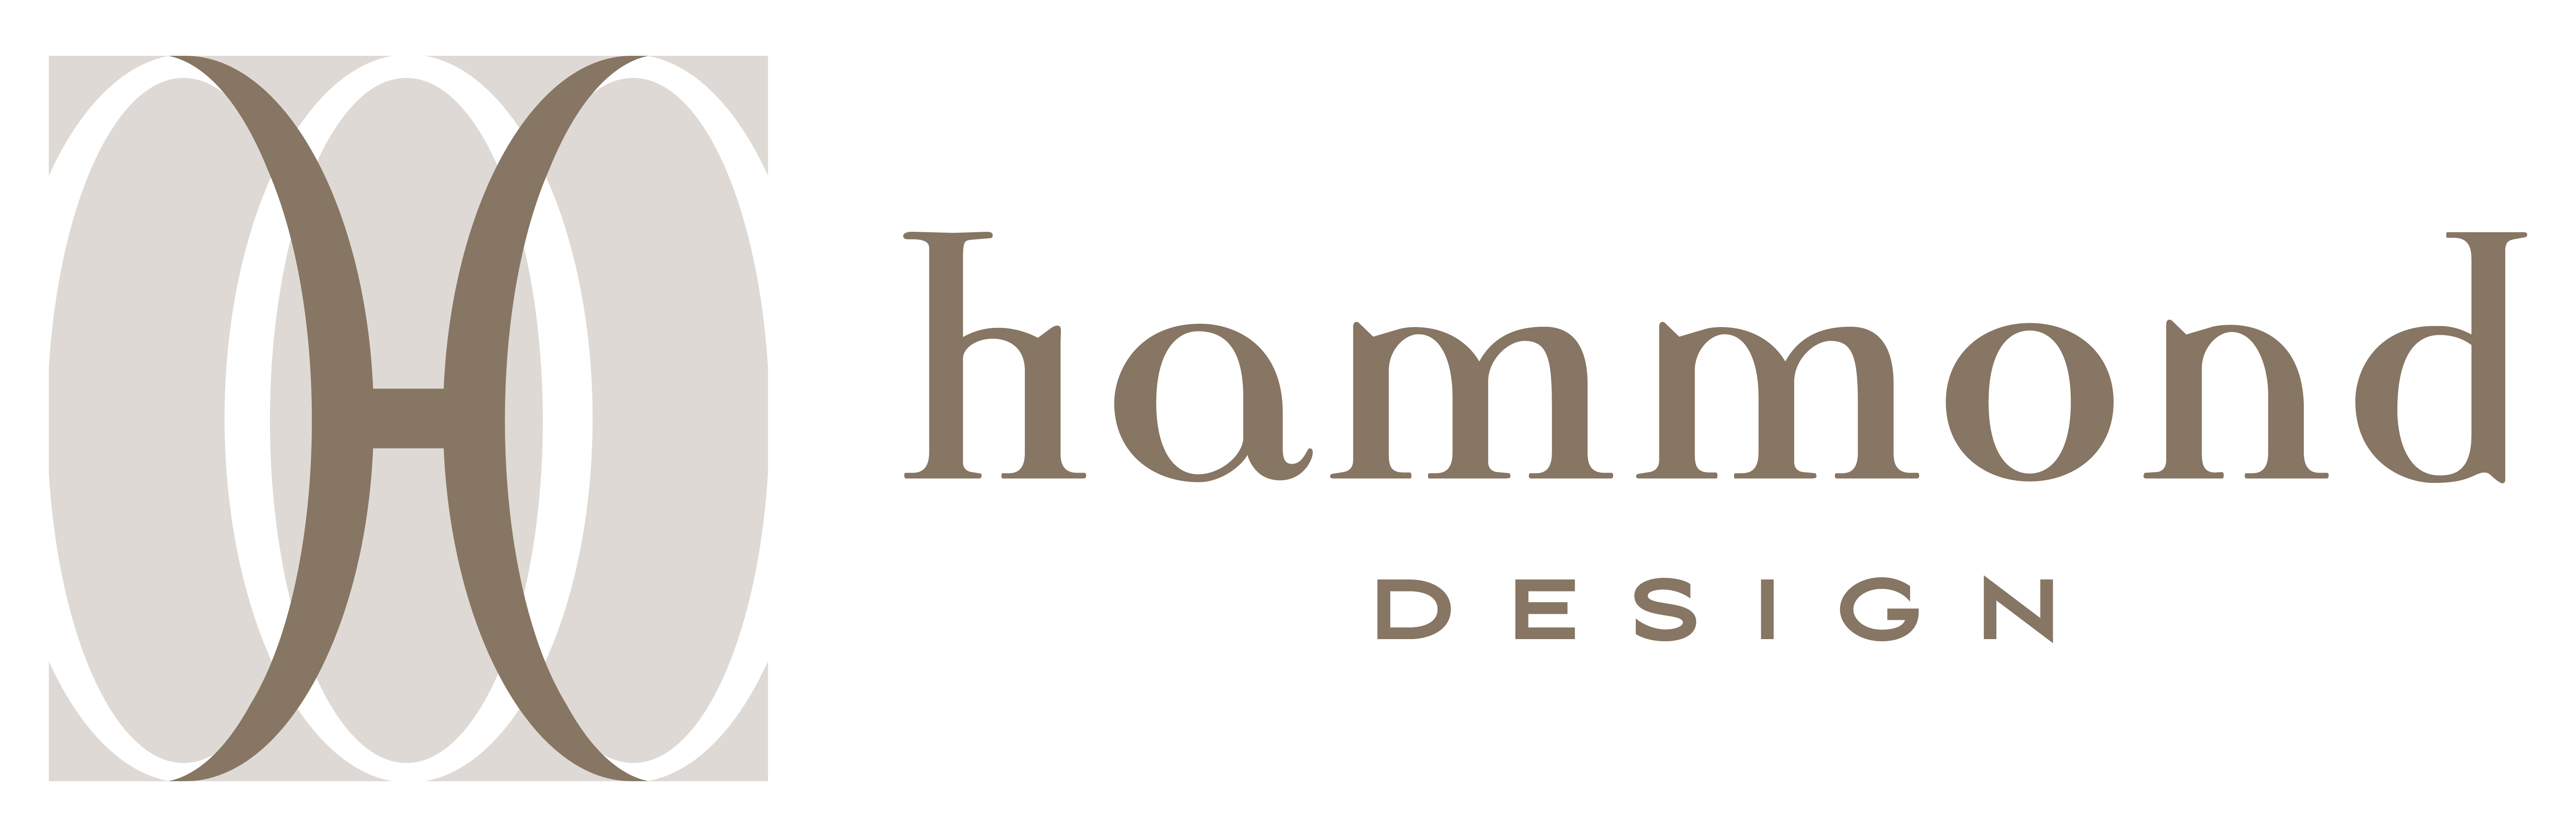 Hammond Design Logo Rgb Horizontal